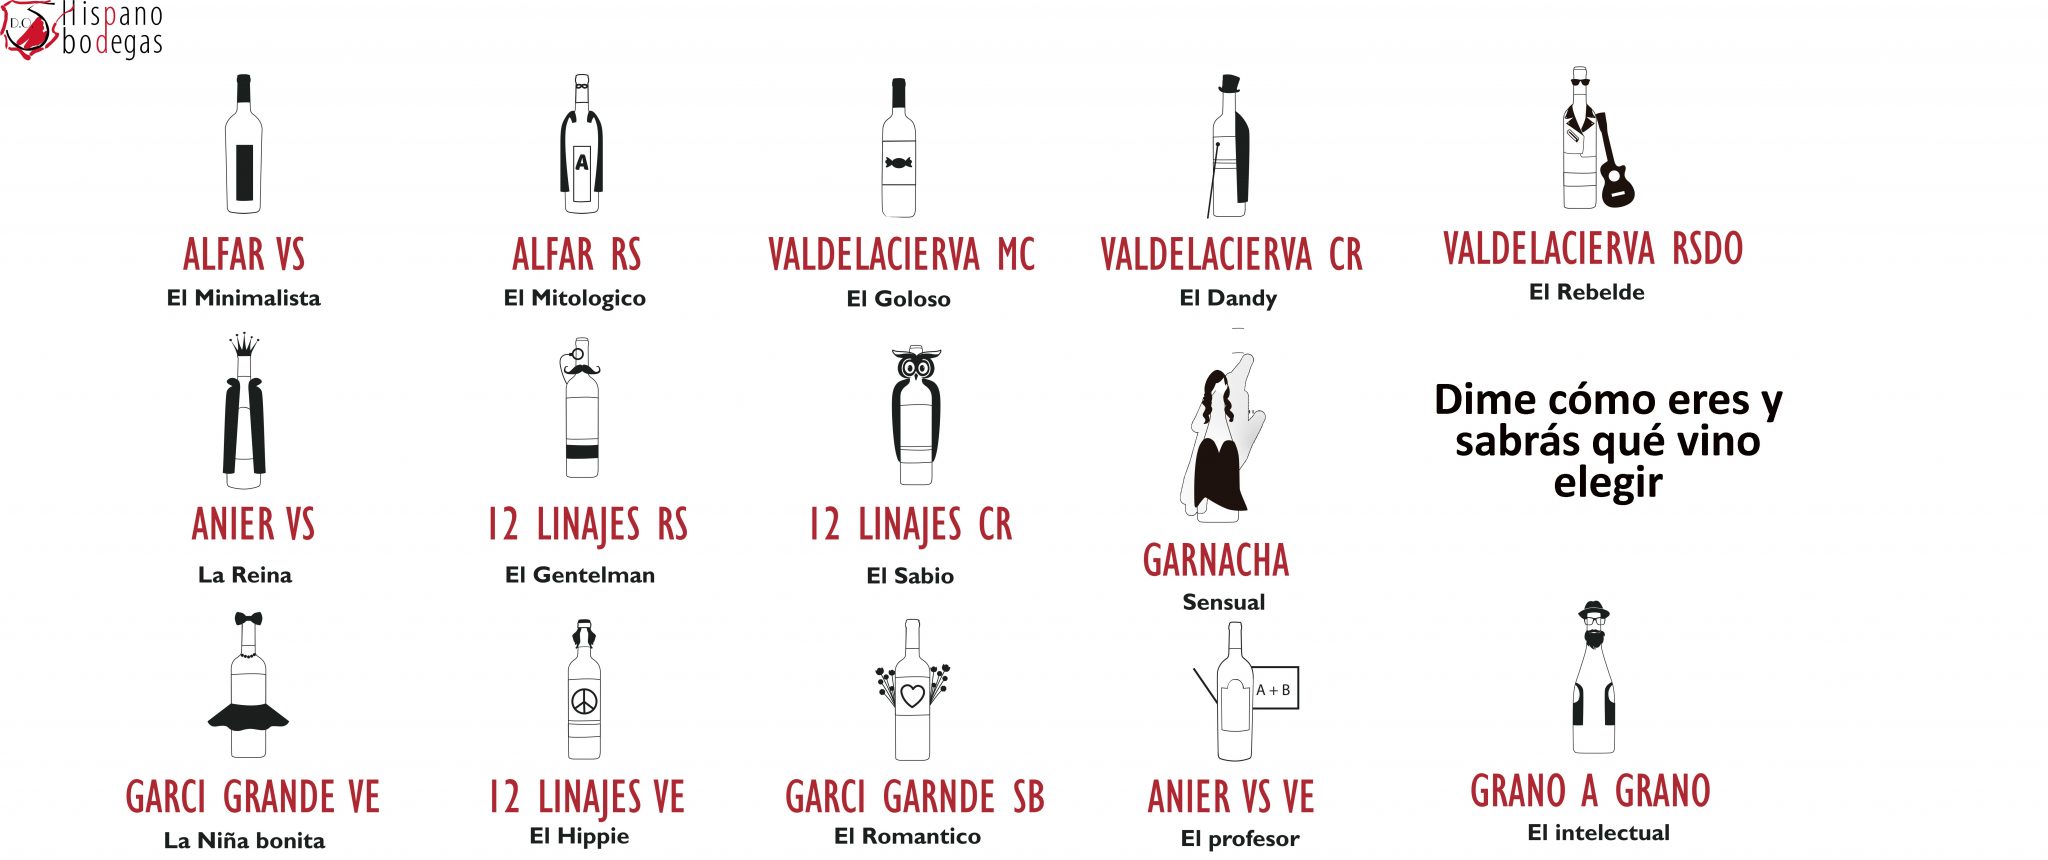 seas como seas en el grupo hispanobodegas han inventado un sistema para elegir un vino seas como seas: de rioja, ribera del duero o rueda